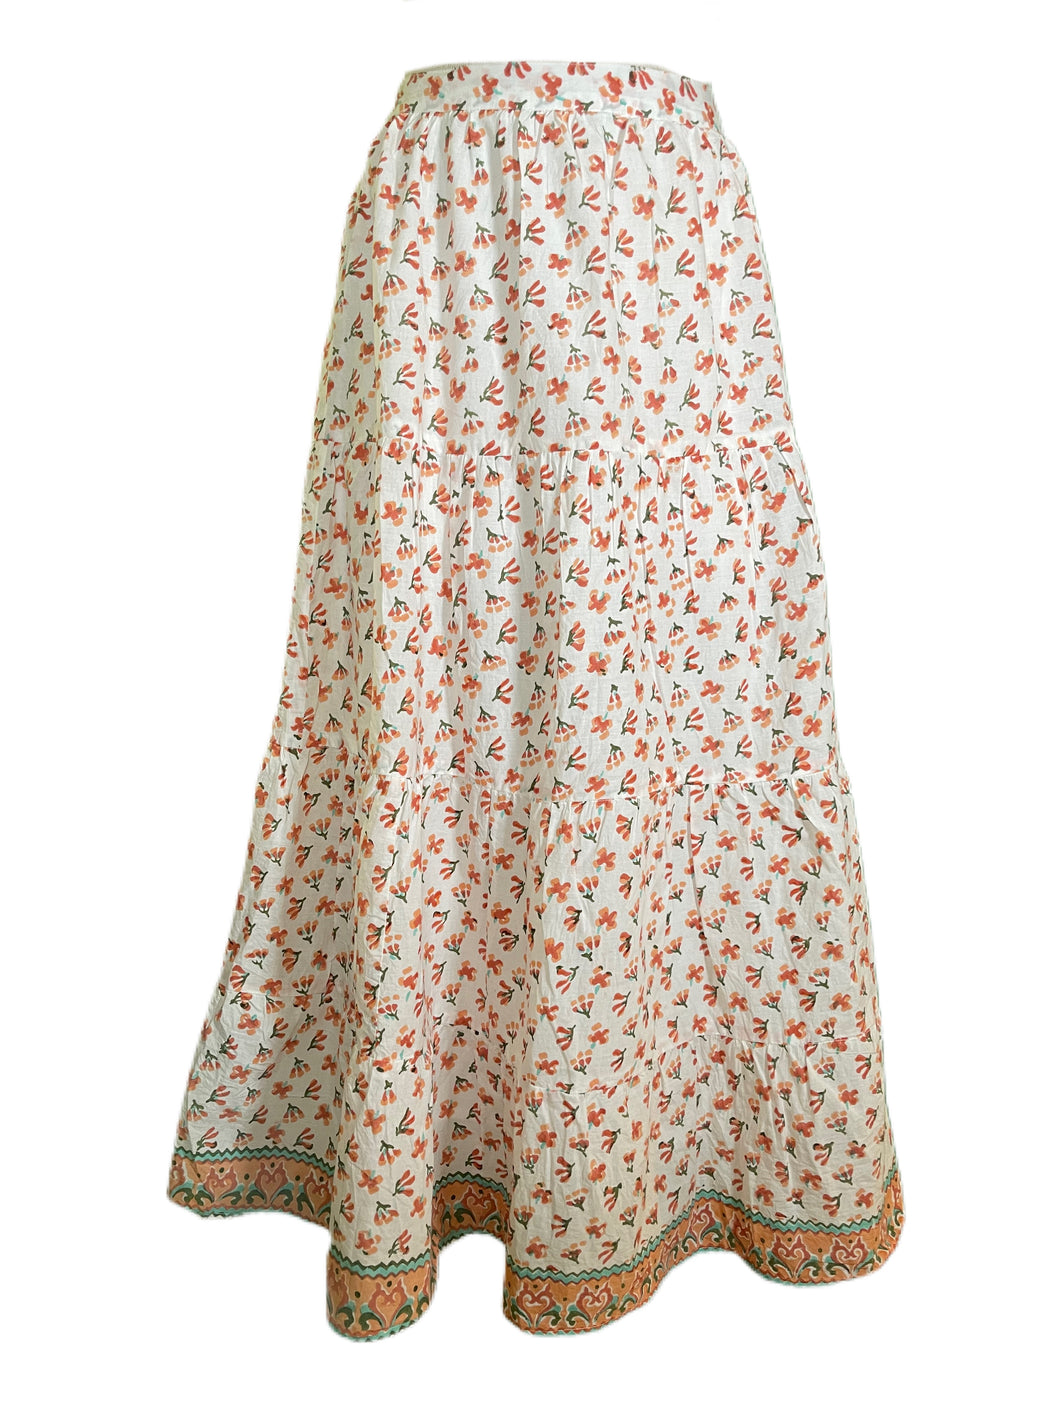 Charlette Skirt - Peach Floral